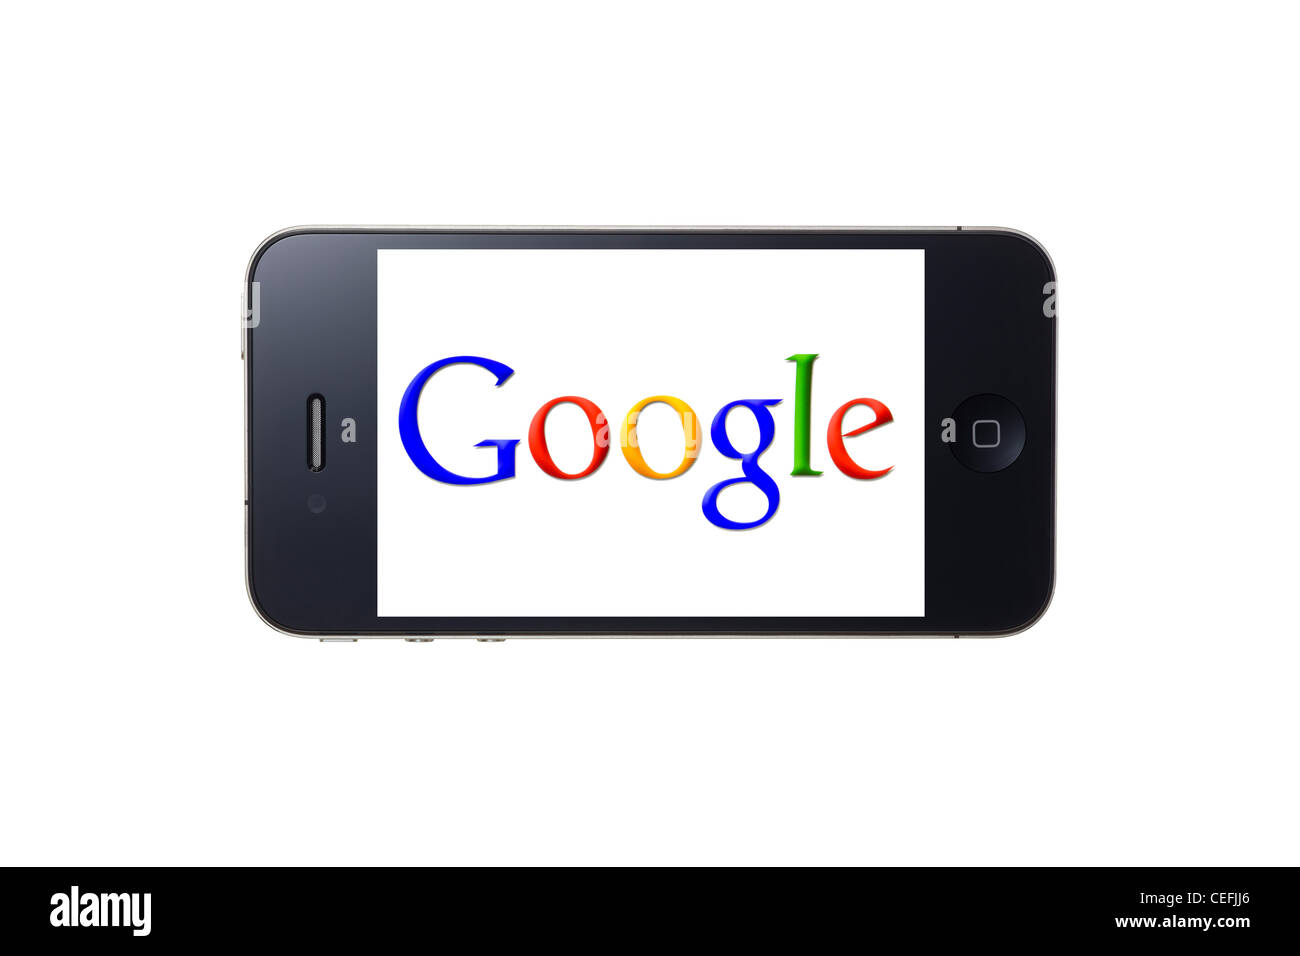 Google logo display on iPhone screen Stock Photo